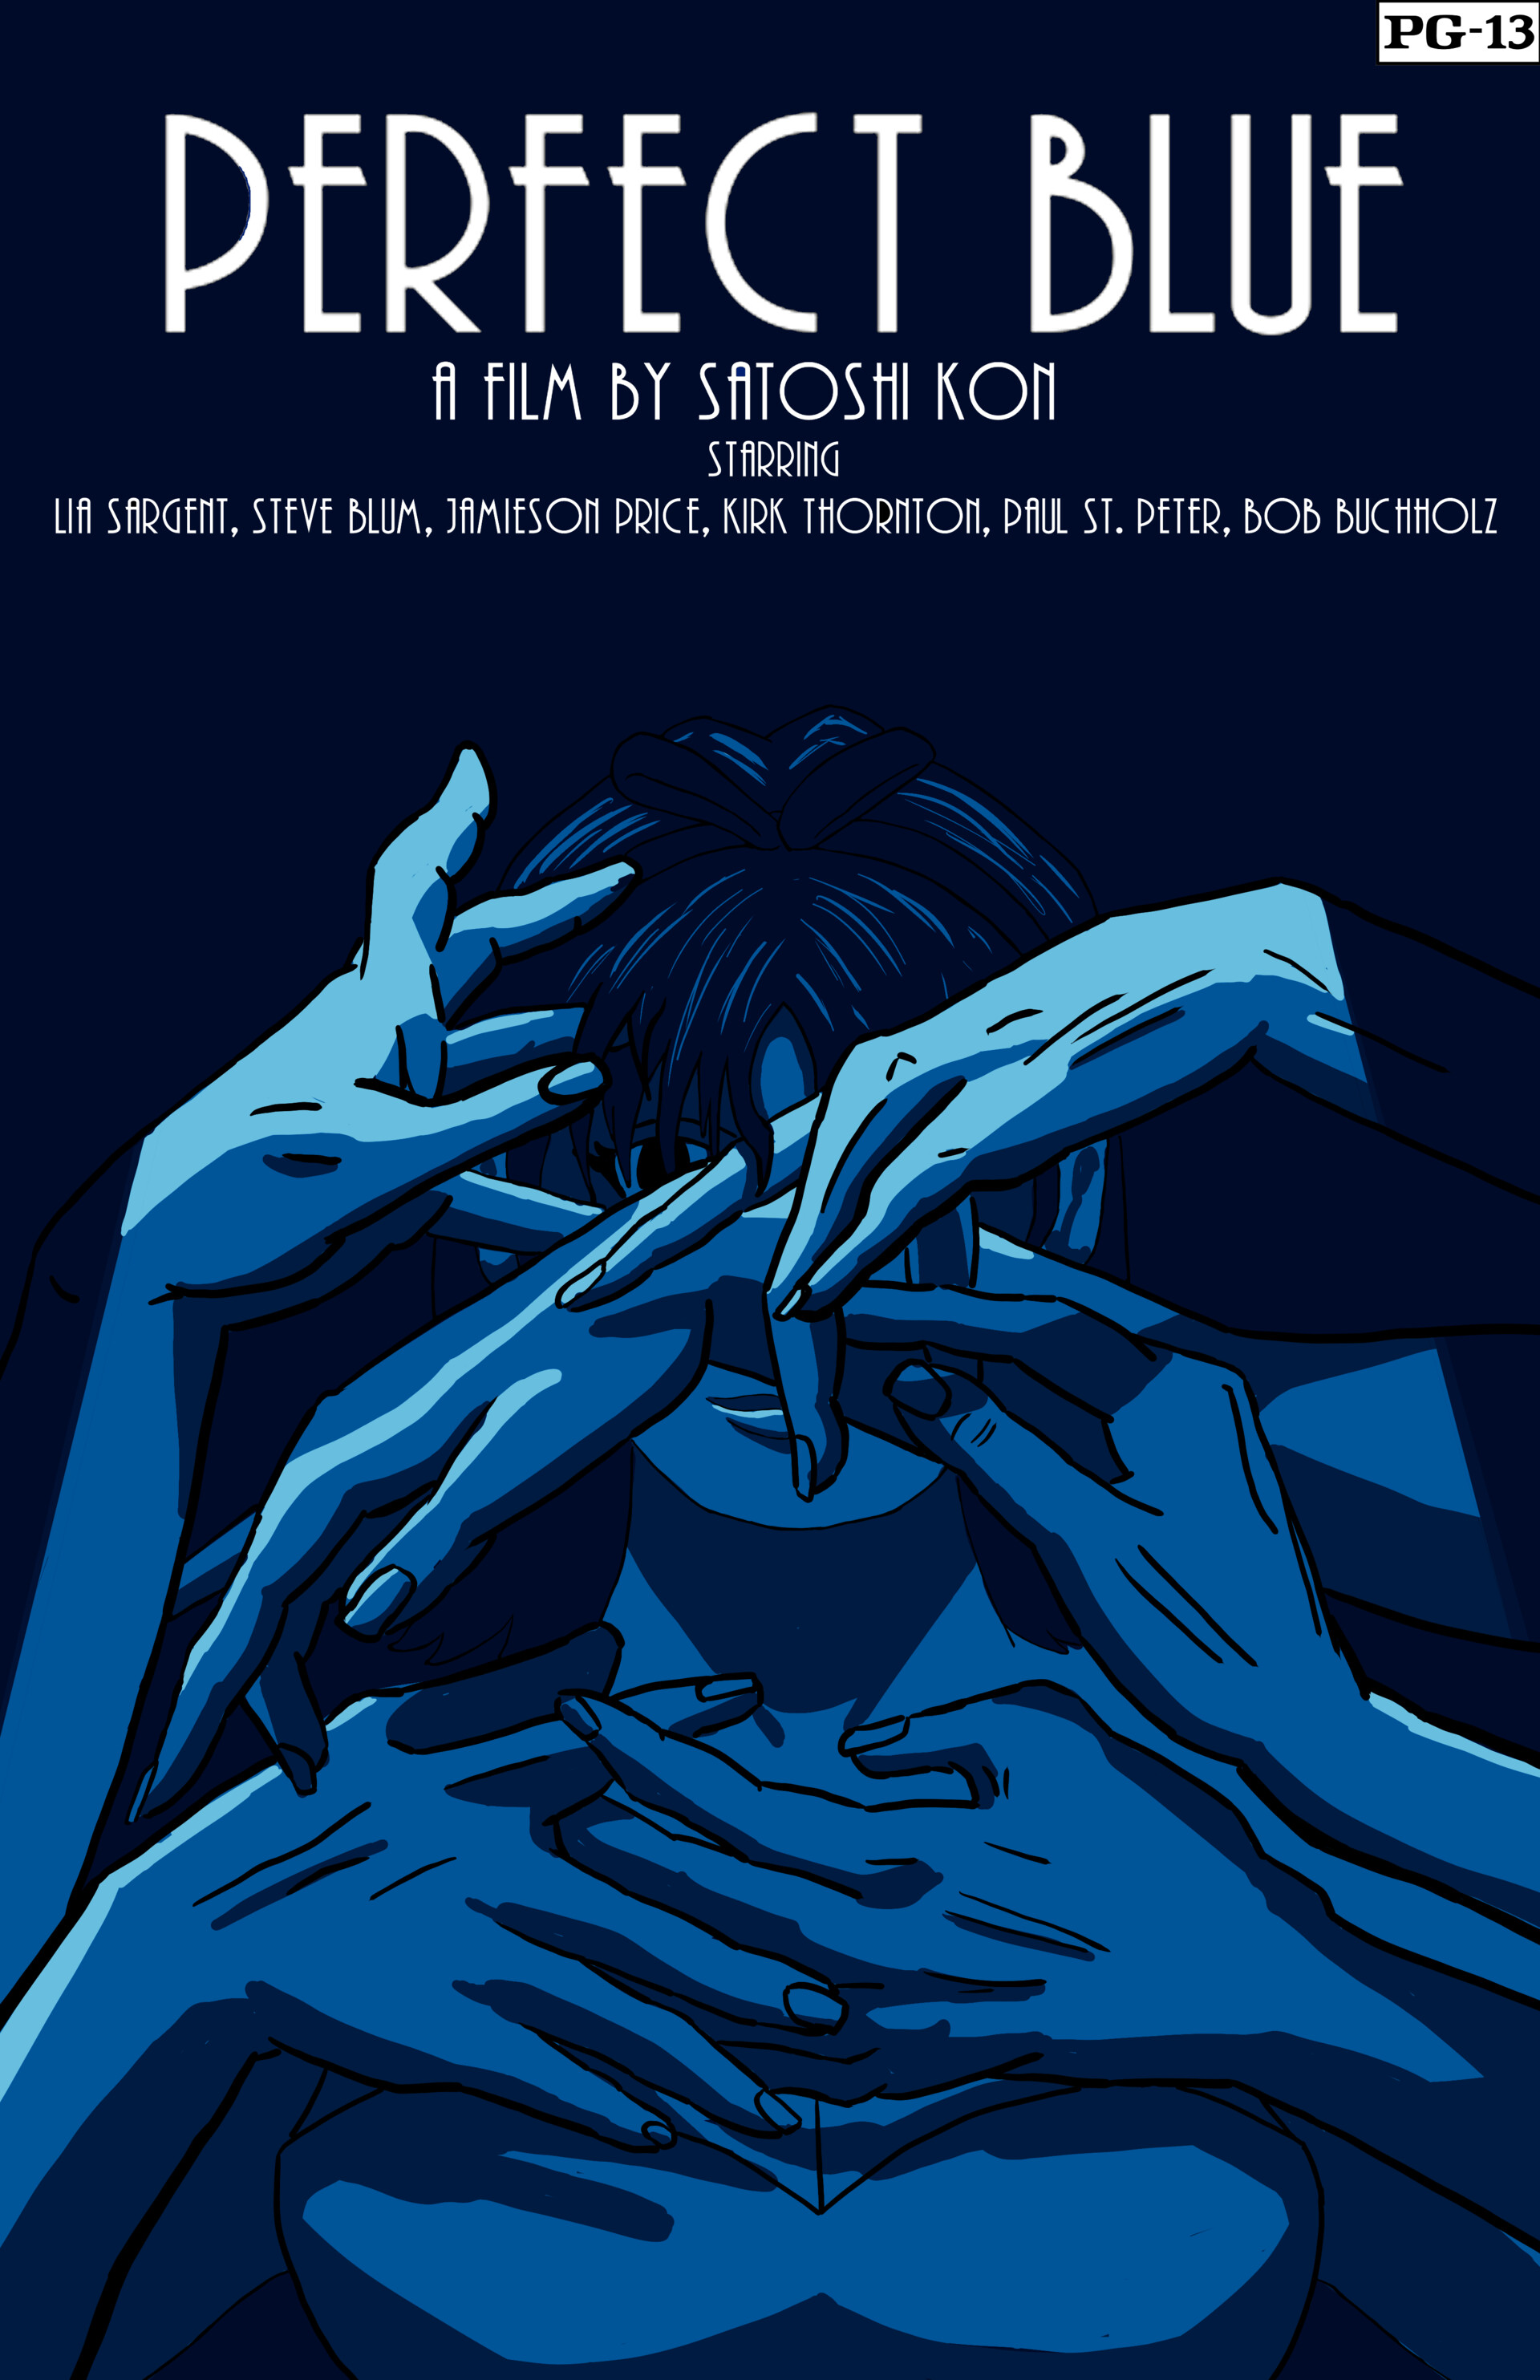 ArtStation - School Project - Horror Movie Poster: Perfect Blue